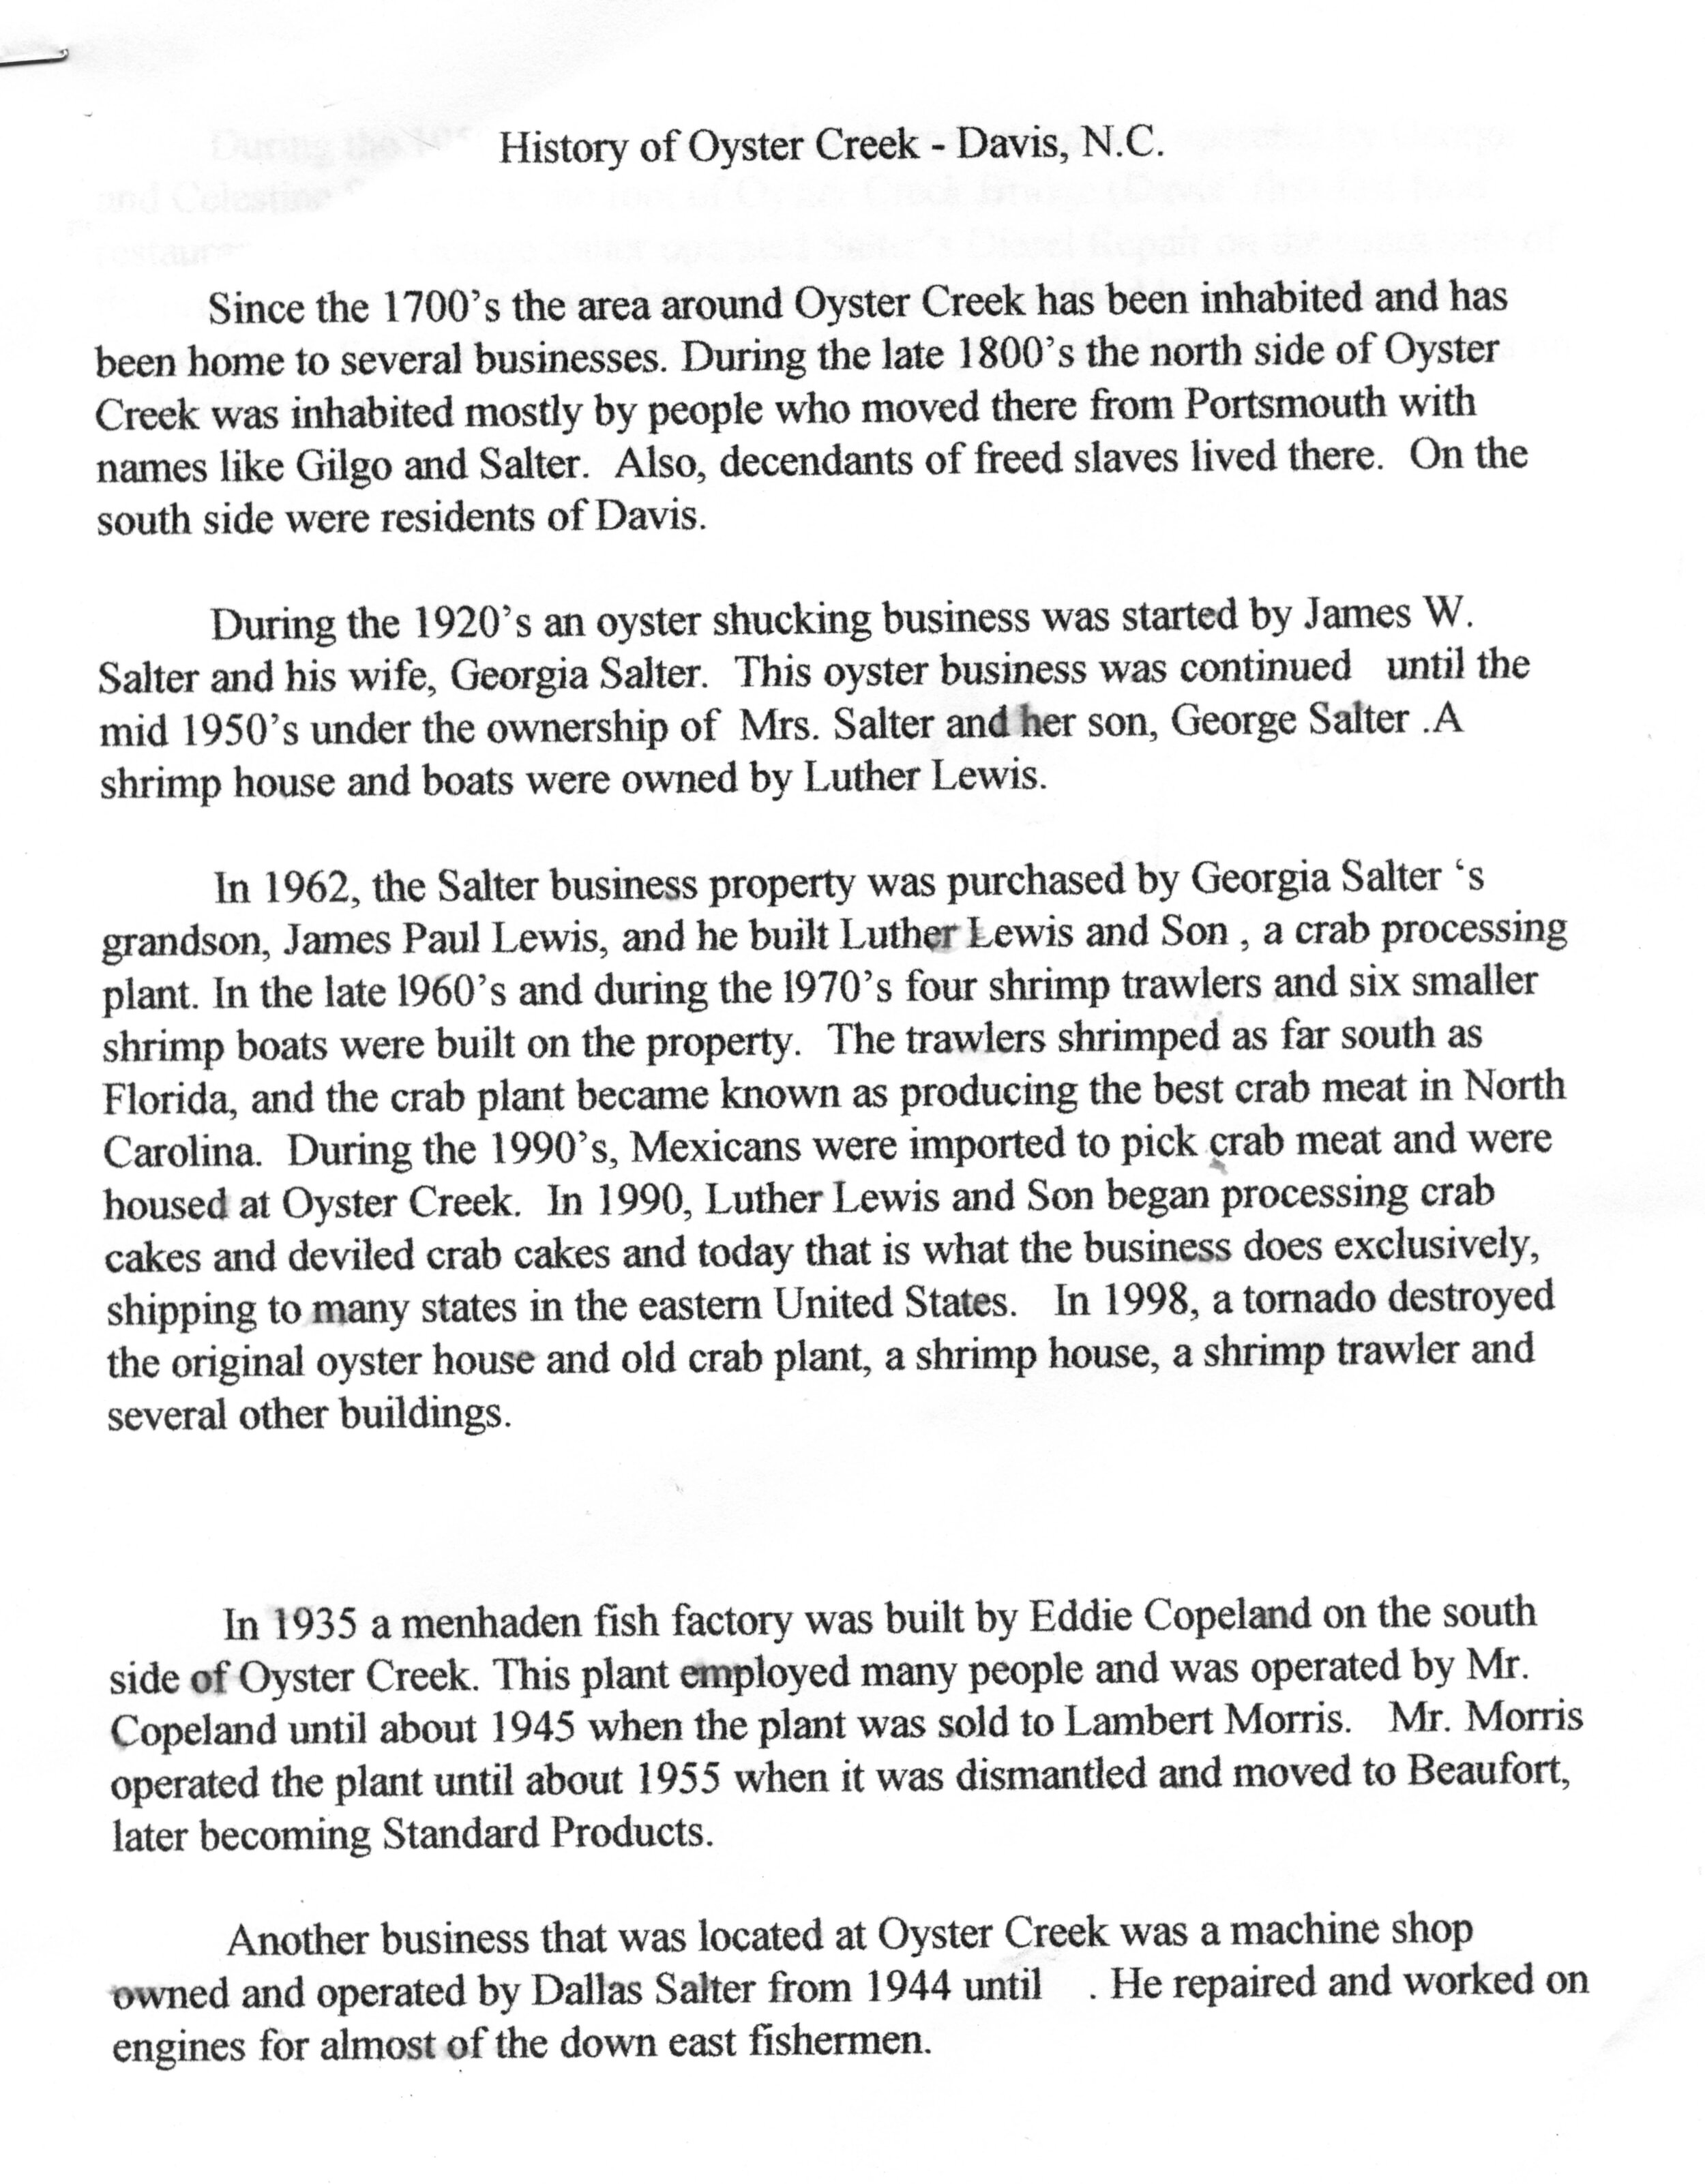 TIA02.VT.013.010 Davis history of Oyster Creeks.jpg